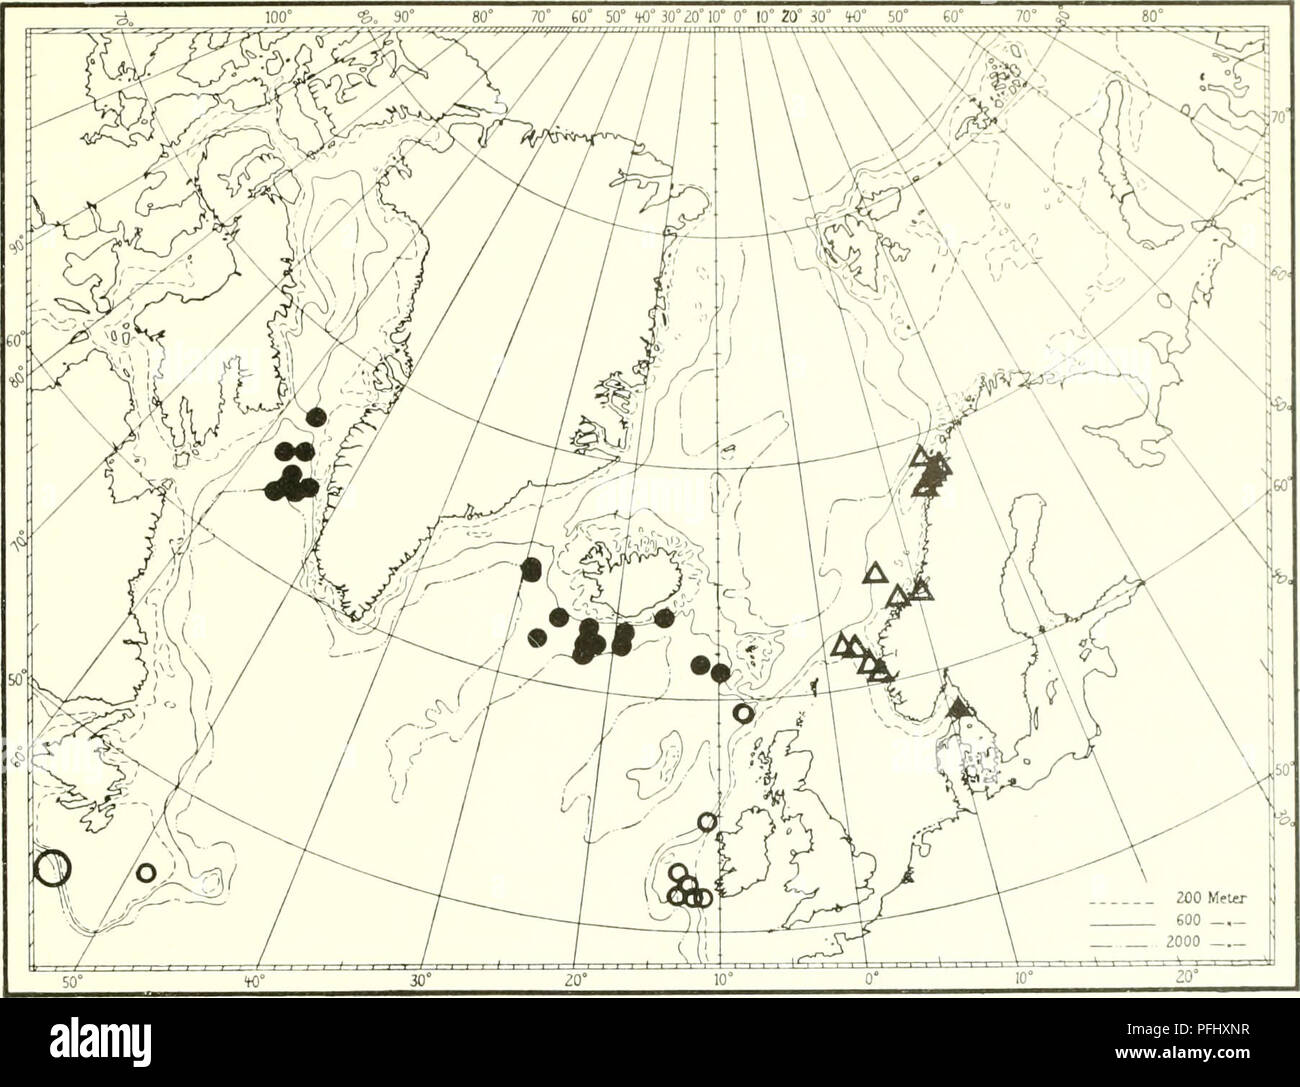 . The Danish Ingolf-expedition. Marine animals -- Arctic regions; Scientific expeditions; Arctic regions. Ot'TOC'ORALLIA. Fig. 53. â¢ Actnu'Ua (irhusciihi (.lolinsnn). A Isidi'lhi ]()jok&gt;ixU M. Sais. 02Â°4O' N. 22Â°17' W. 1109)11, 3 9('. &quot;Innolf St. (i9. erw N. 27'00' W. 913m, 6Â°1 C. â - Si. 62Â°58' N. 25Â°24' W. 1192 m, 4Â°8C. â - S4. 64Â°45' N. 29Â°0()' W. 1070 m, 4Â°4C. â - 90. 6r08' N. 9Â°4B' W. 847 m, -'Mirhapl Sars&quot; St. 79. 64Â°05' N. 55Â°20' W. 1100 m, '-Tialfi'&quot; St. 337. 64Â°40' N. 56Â°37' W. 750 m, â - 402. 63Â°54' N. 53Â°15' W. 98,S m, â - 428. 63Â°54' N. 53Â° 15'  Stock Photo